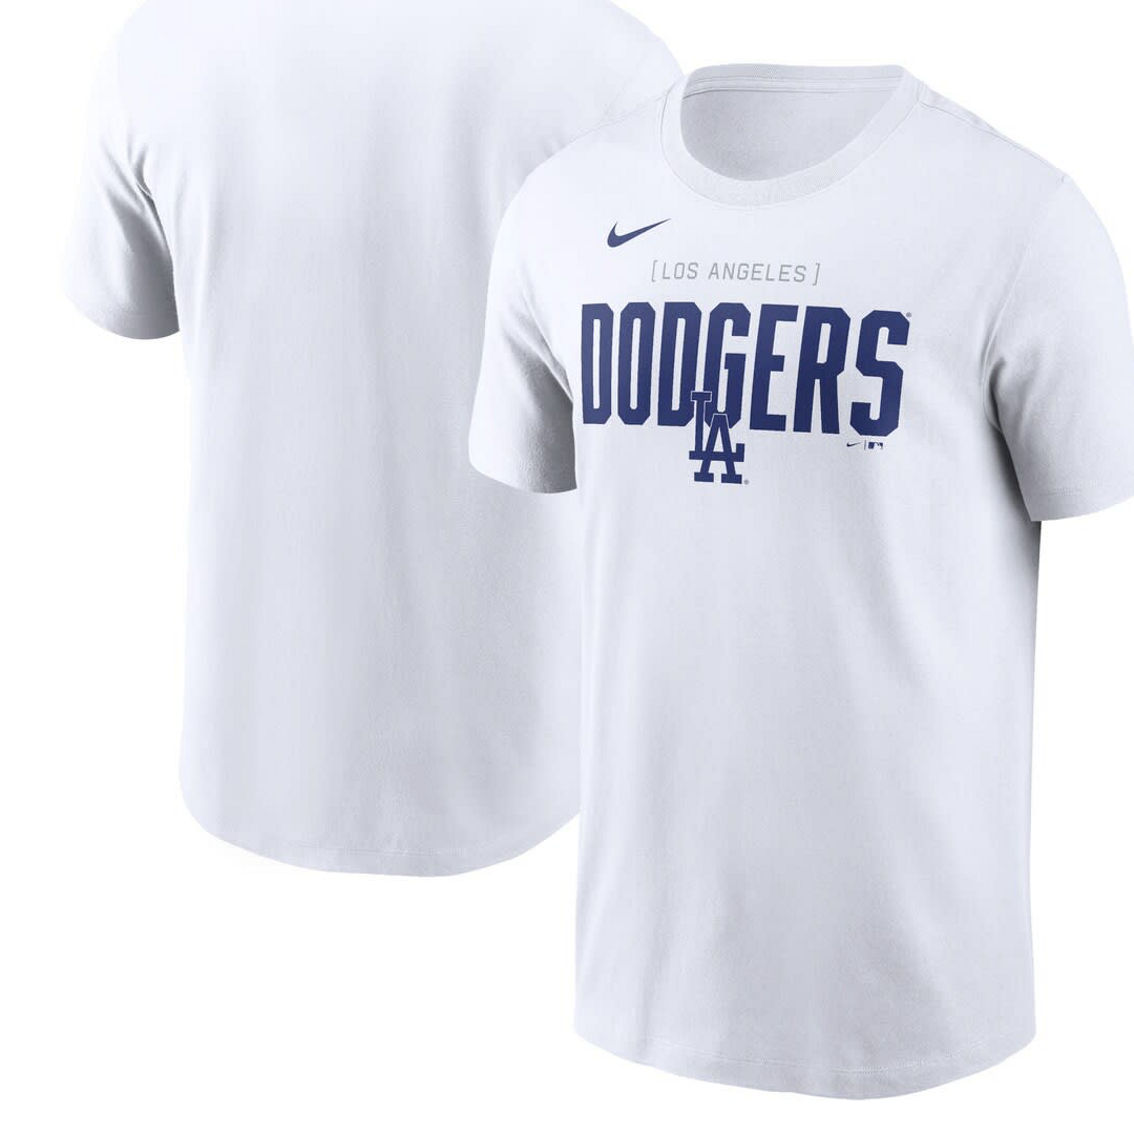 Nike Men's White Los Angeles Dodgers Home Team Bracket Stack T-Shirt - Image 2 of 4